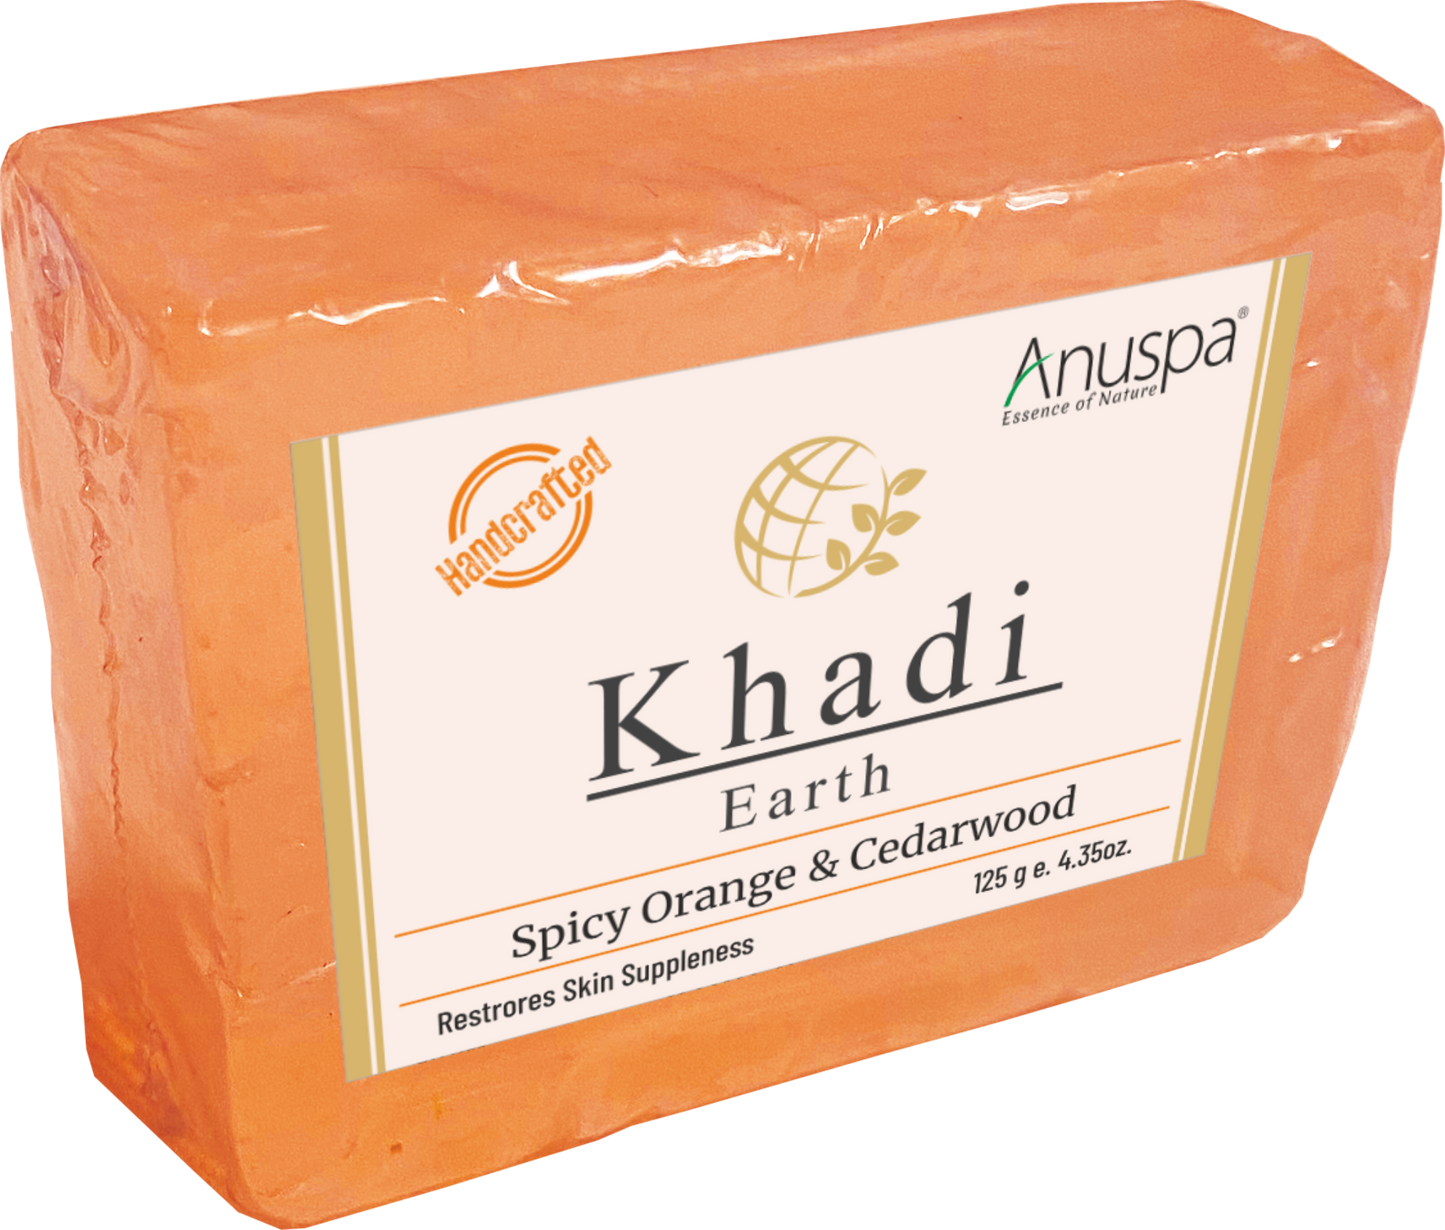 Anuspa Handcrafted Herbal Khadi Earth Spicy Orange & Cedar Wood Bathing Bar restores skin suppleness 125gms